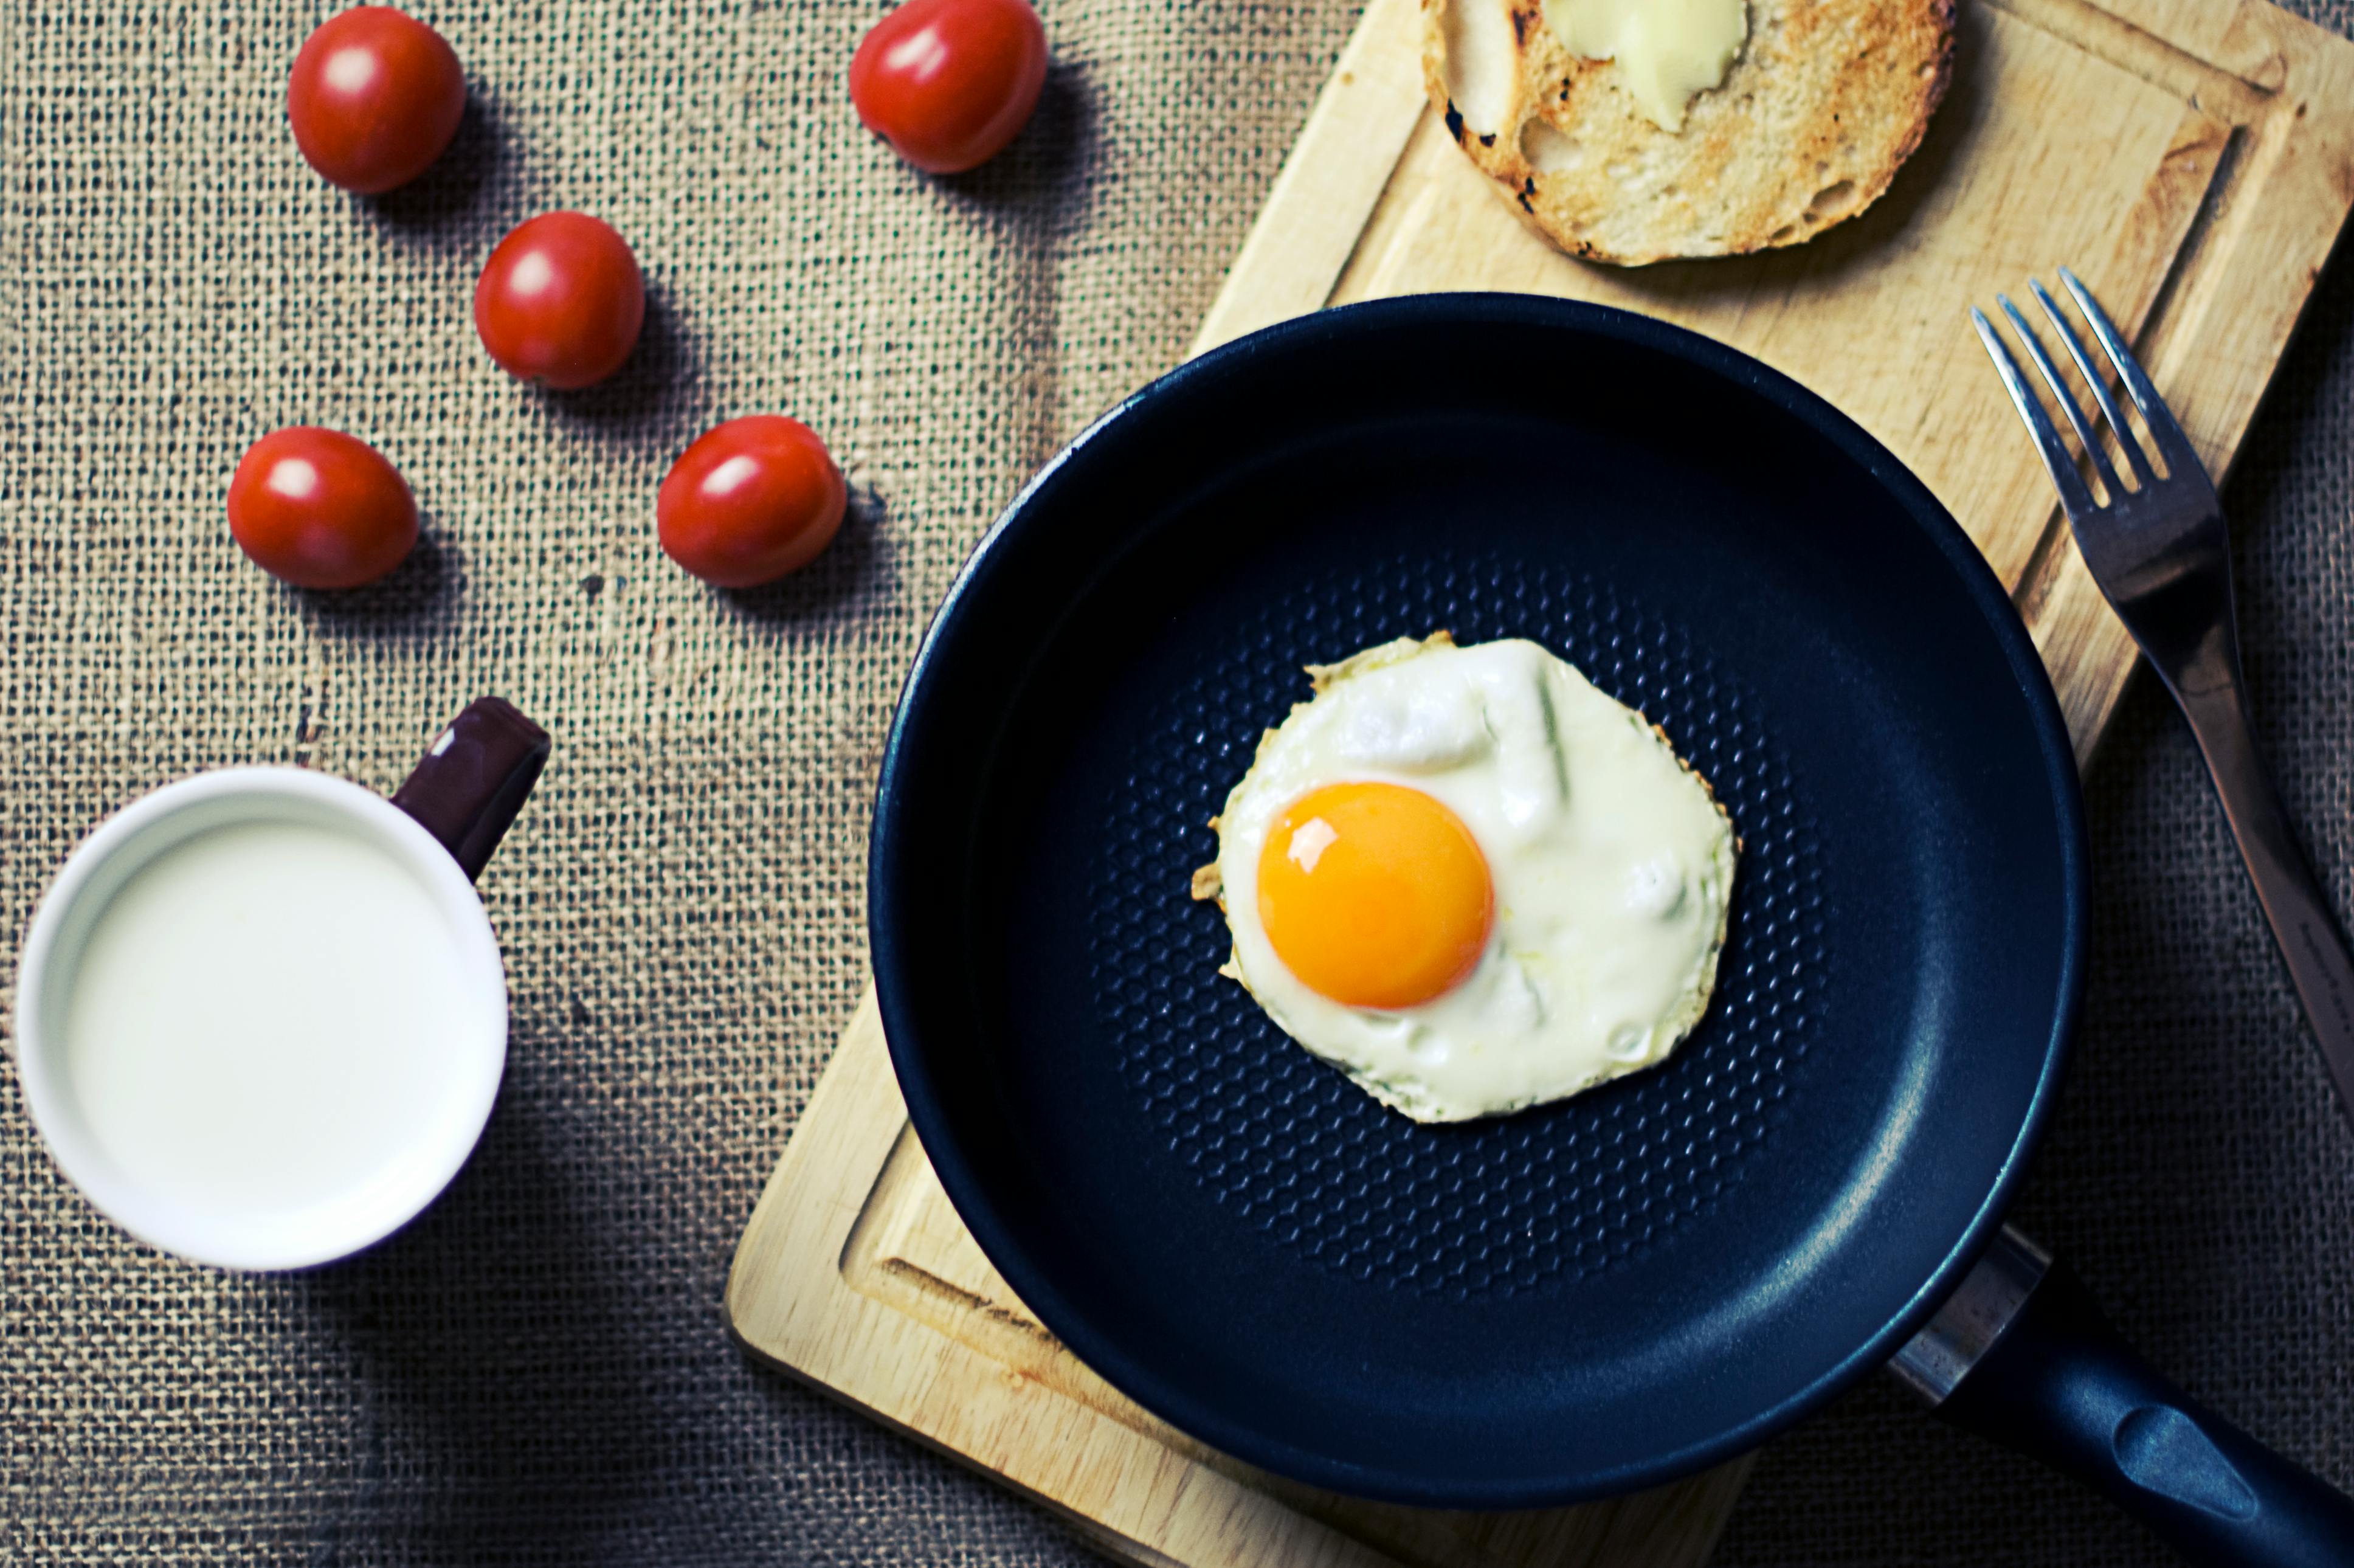 https://static.pexels.com/photos/8806/food-breakfast-egg-milk.jpg